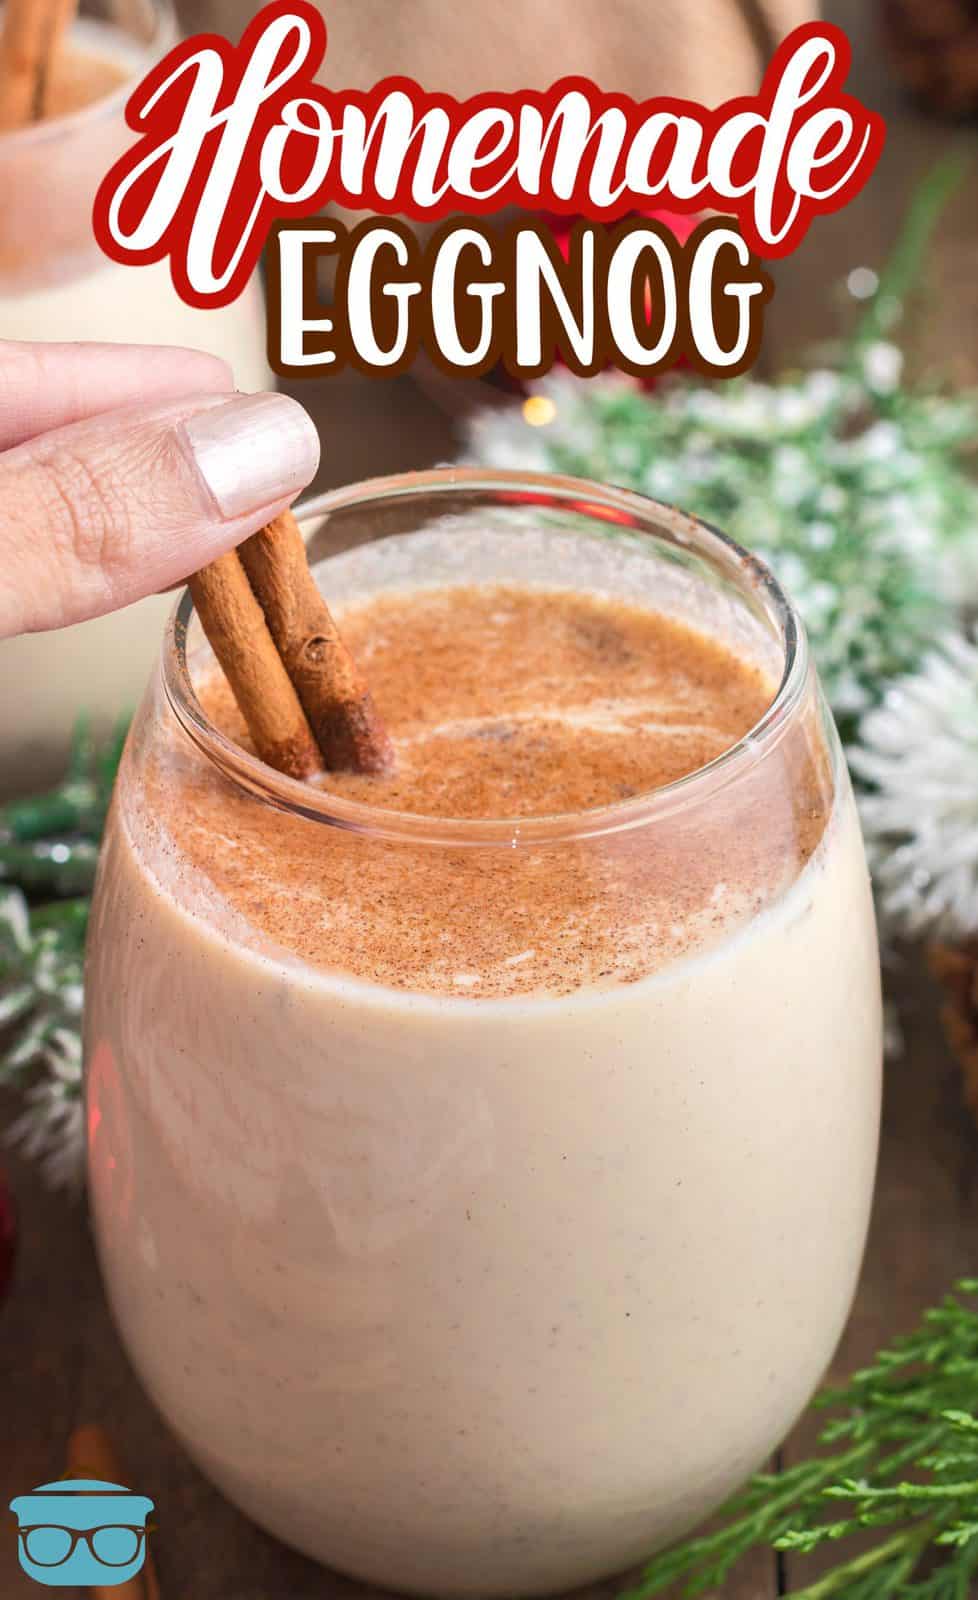 Pinterest image of hand putting cinnamon stick into glass of Homemade Eggnog.